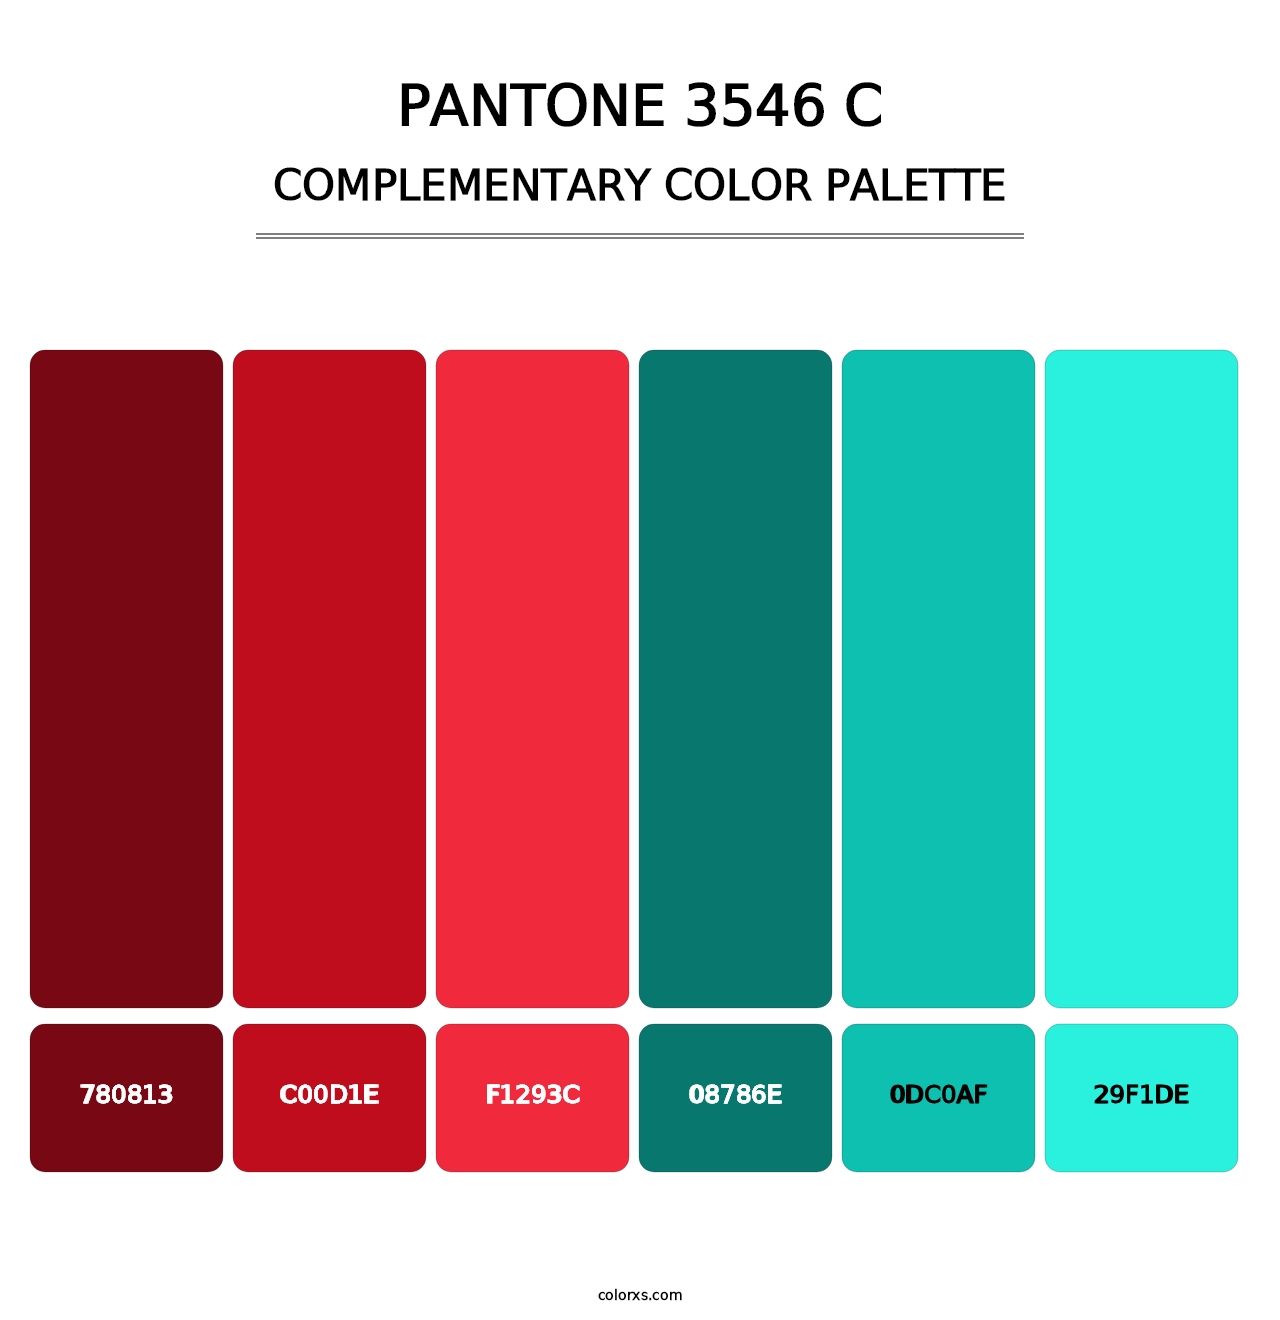 PANTONE 3546 C - Complementary Color Palette